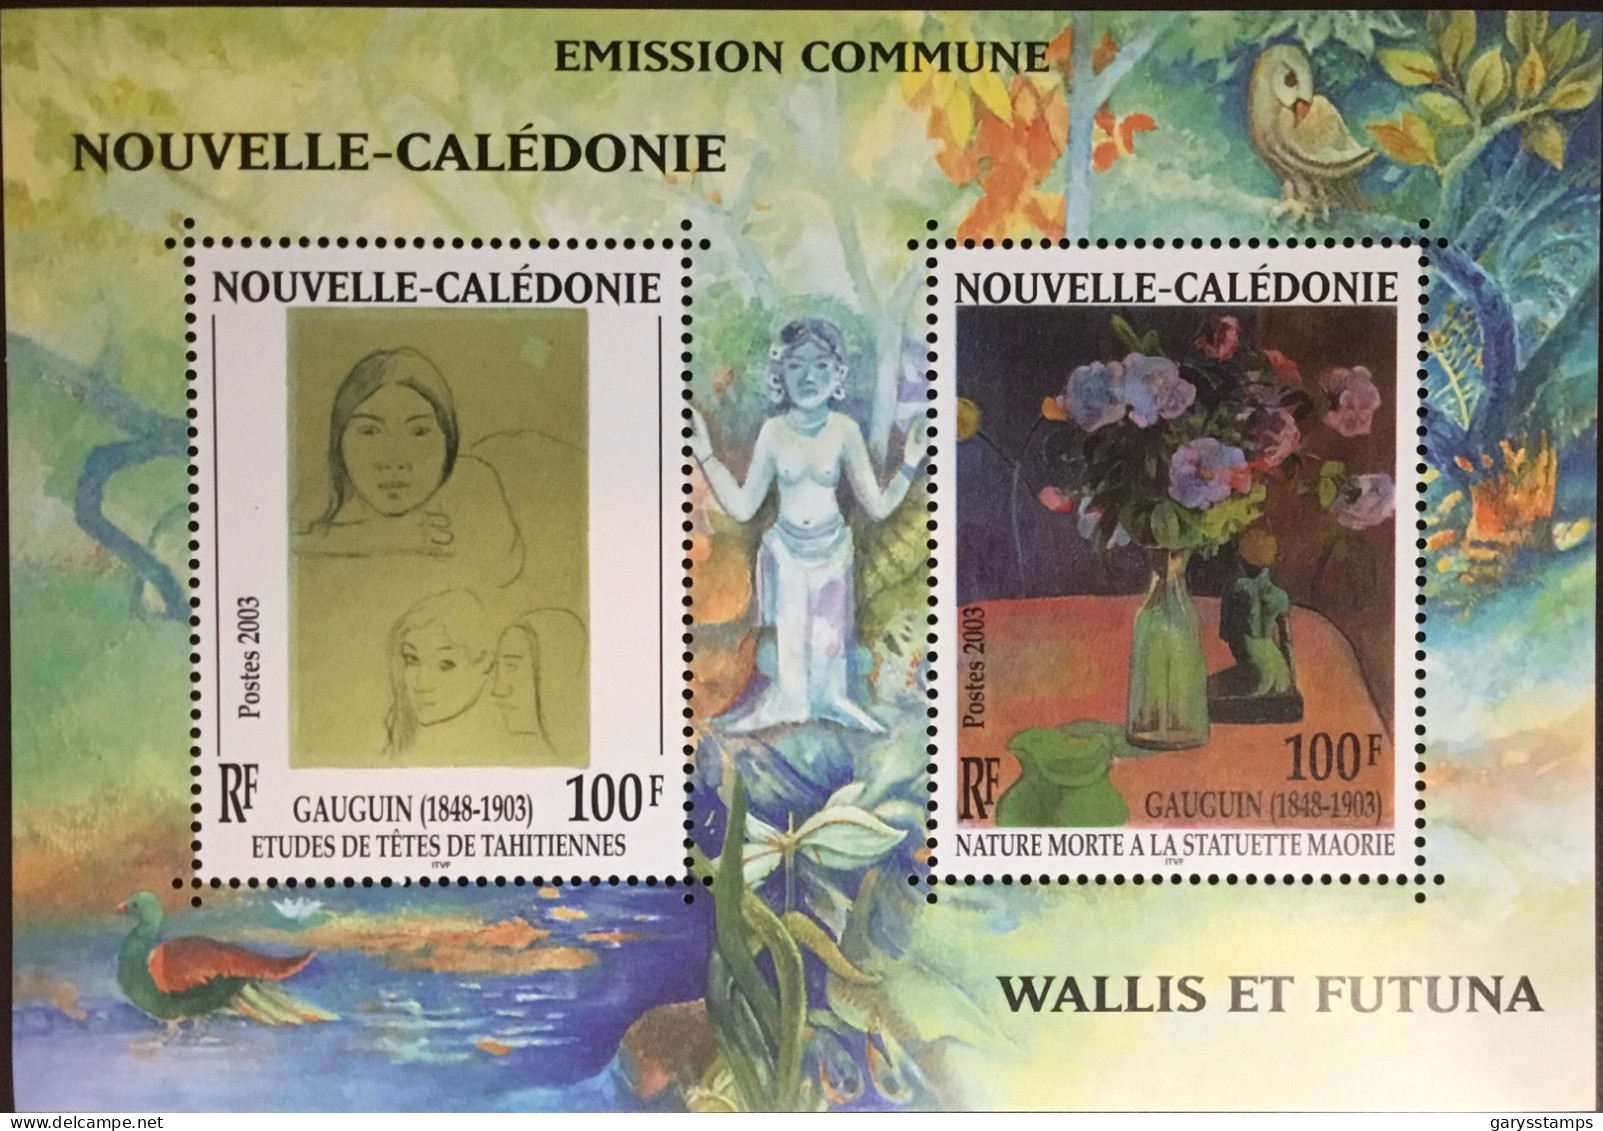 New Caledonia Caledonie 2003 Gauguin Centenary Joint Issue Minisheet MNH - Nuovi